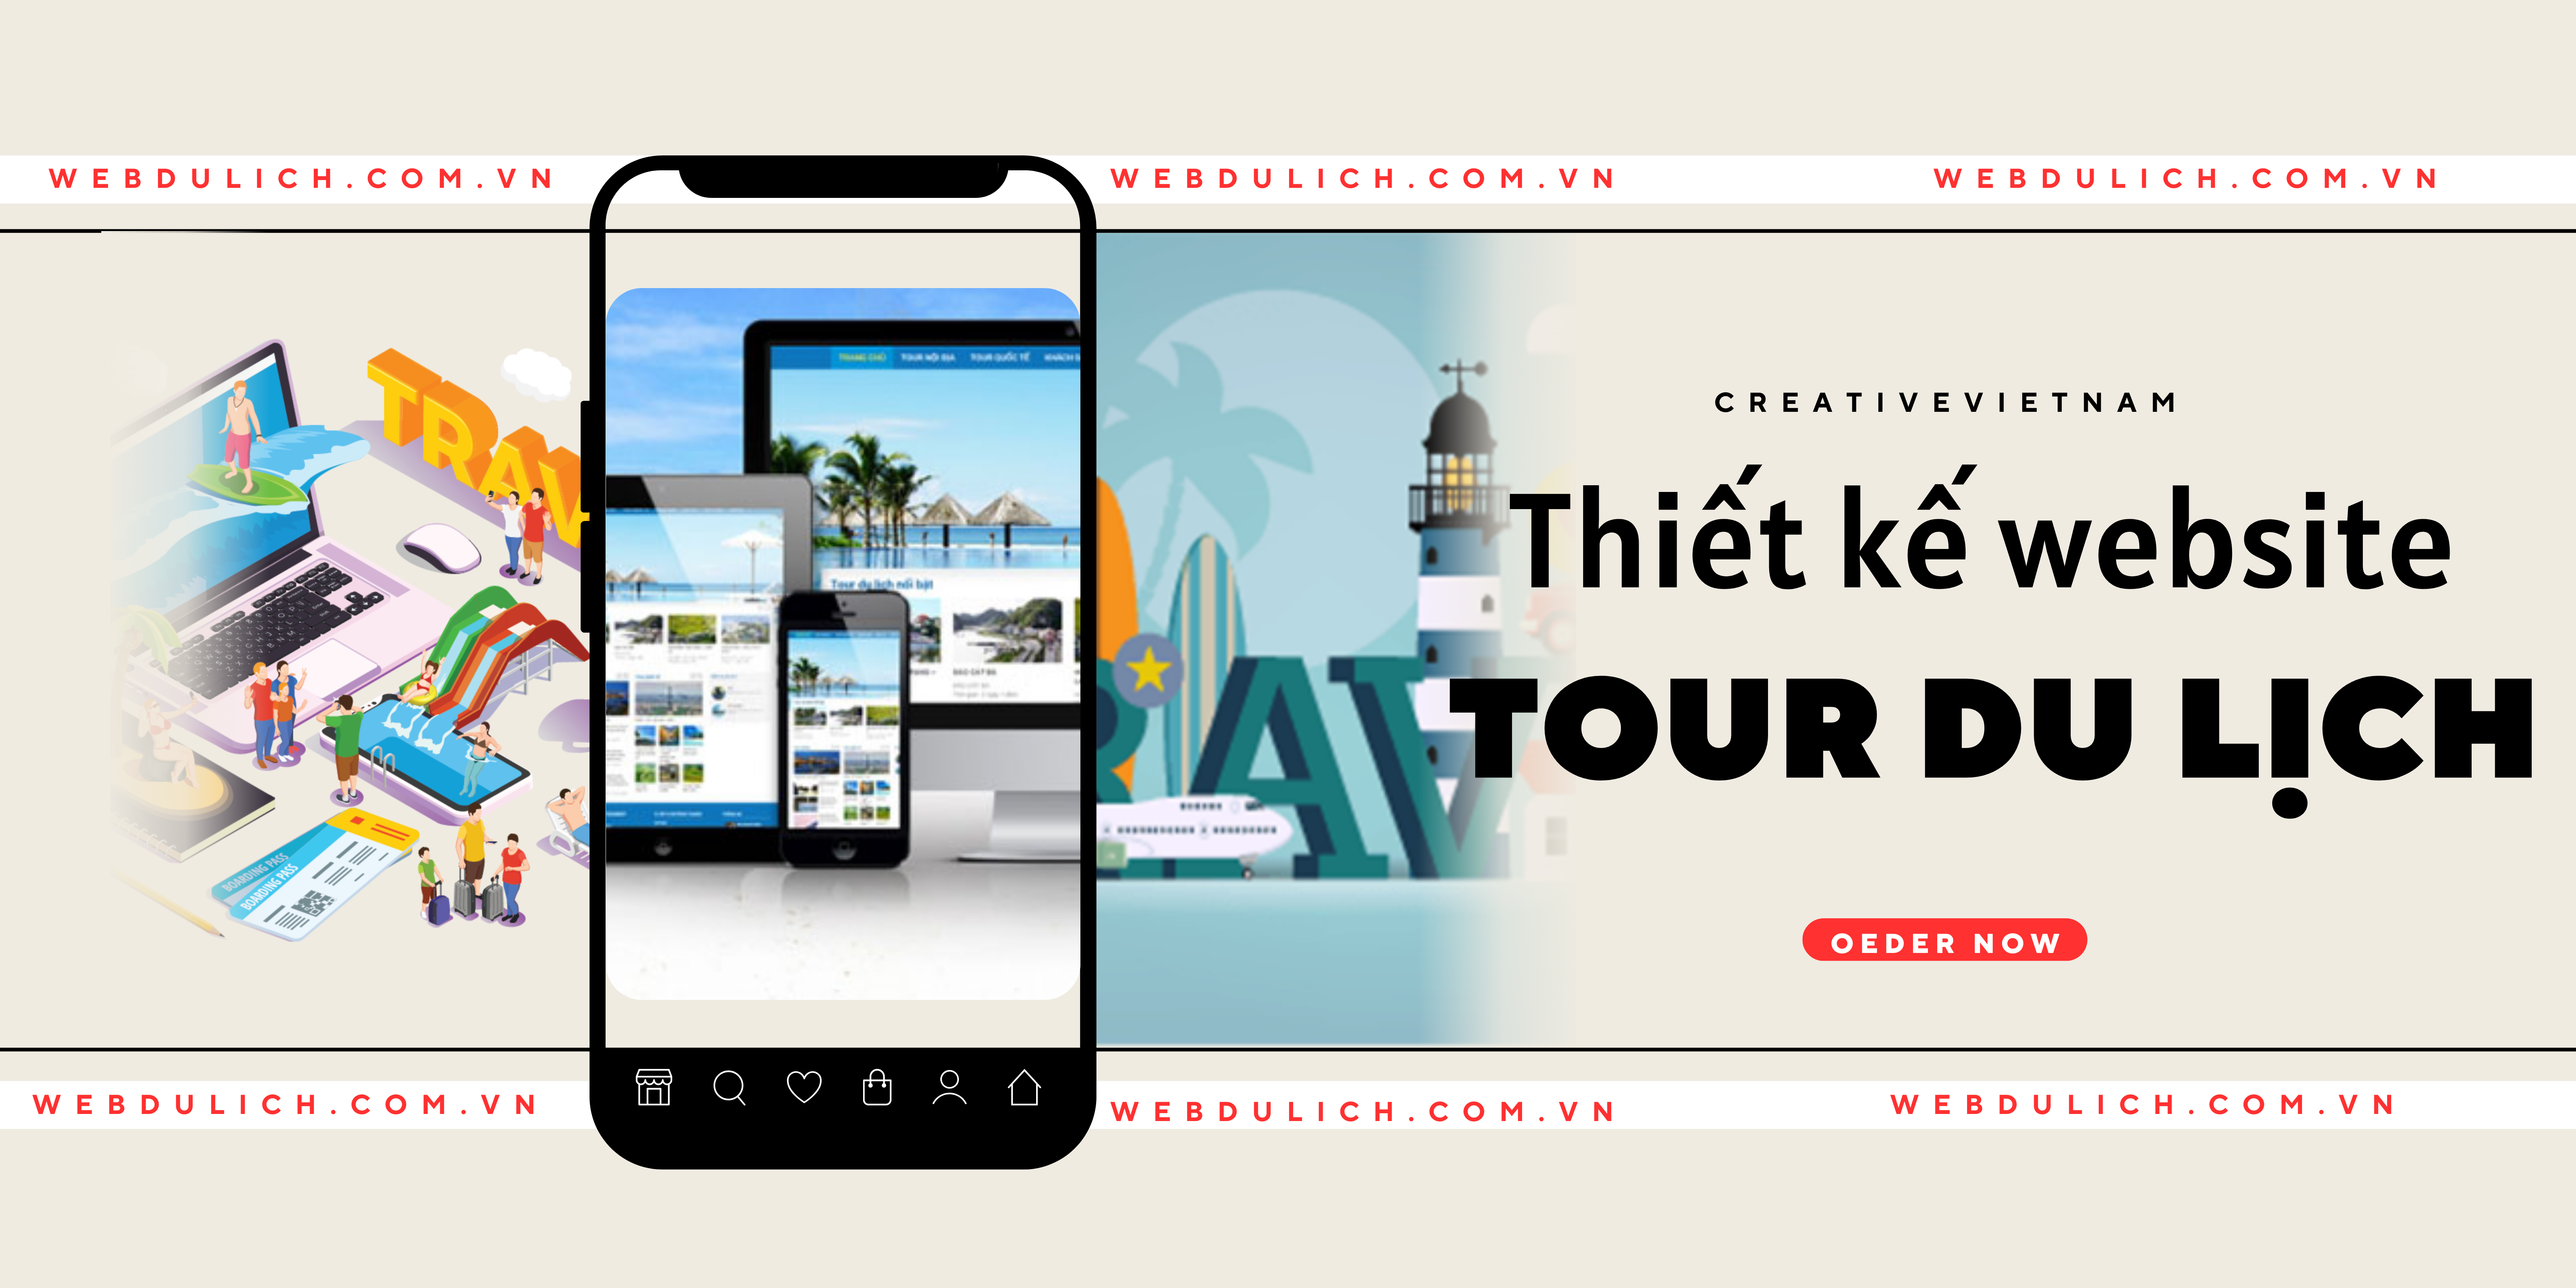 Thiết kế website Tour du lịch